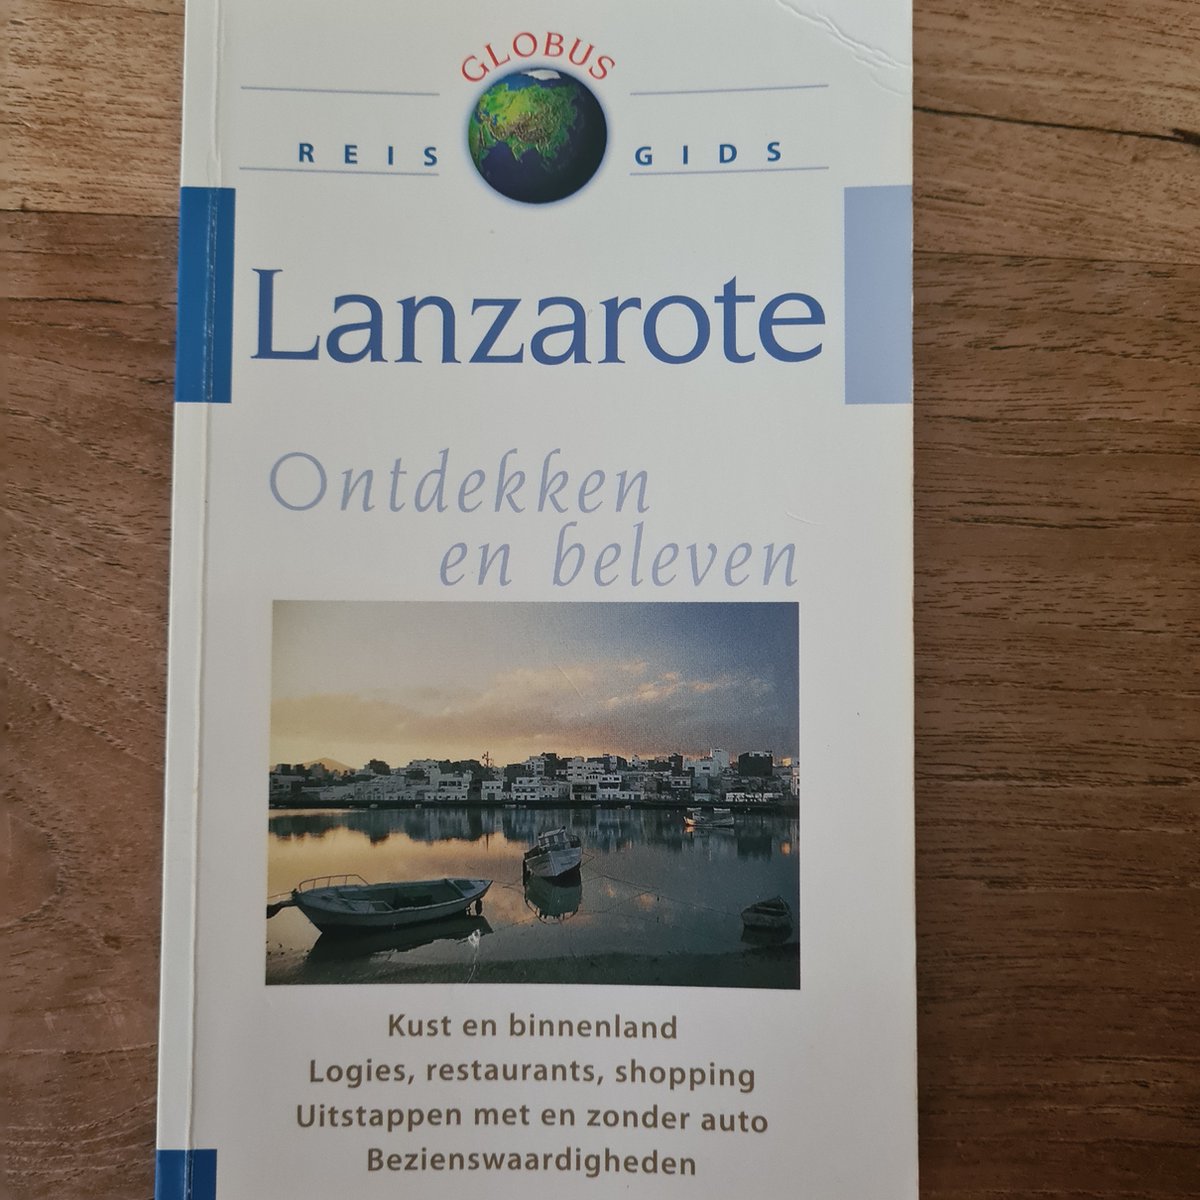 Lanzarote / Globus reisgids